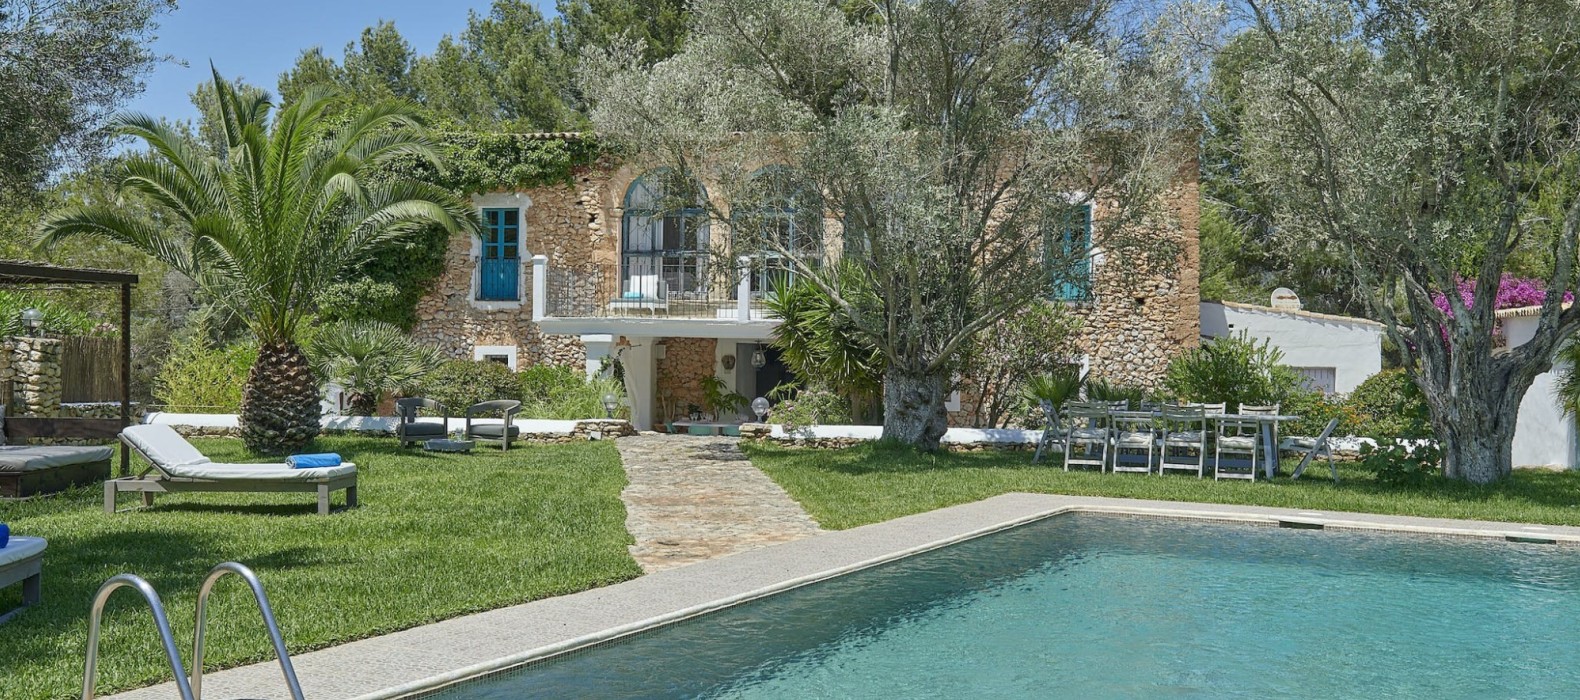 Exterior villa with pool of Finca Traditionale in Ibiza